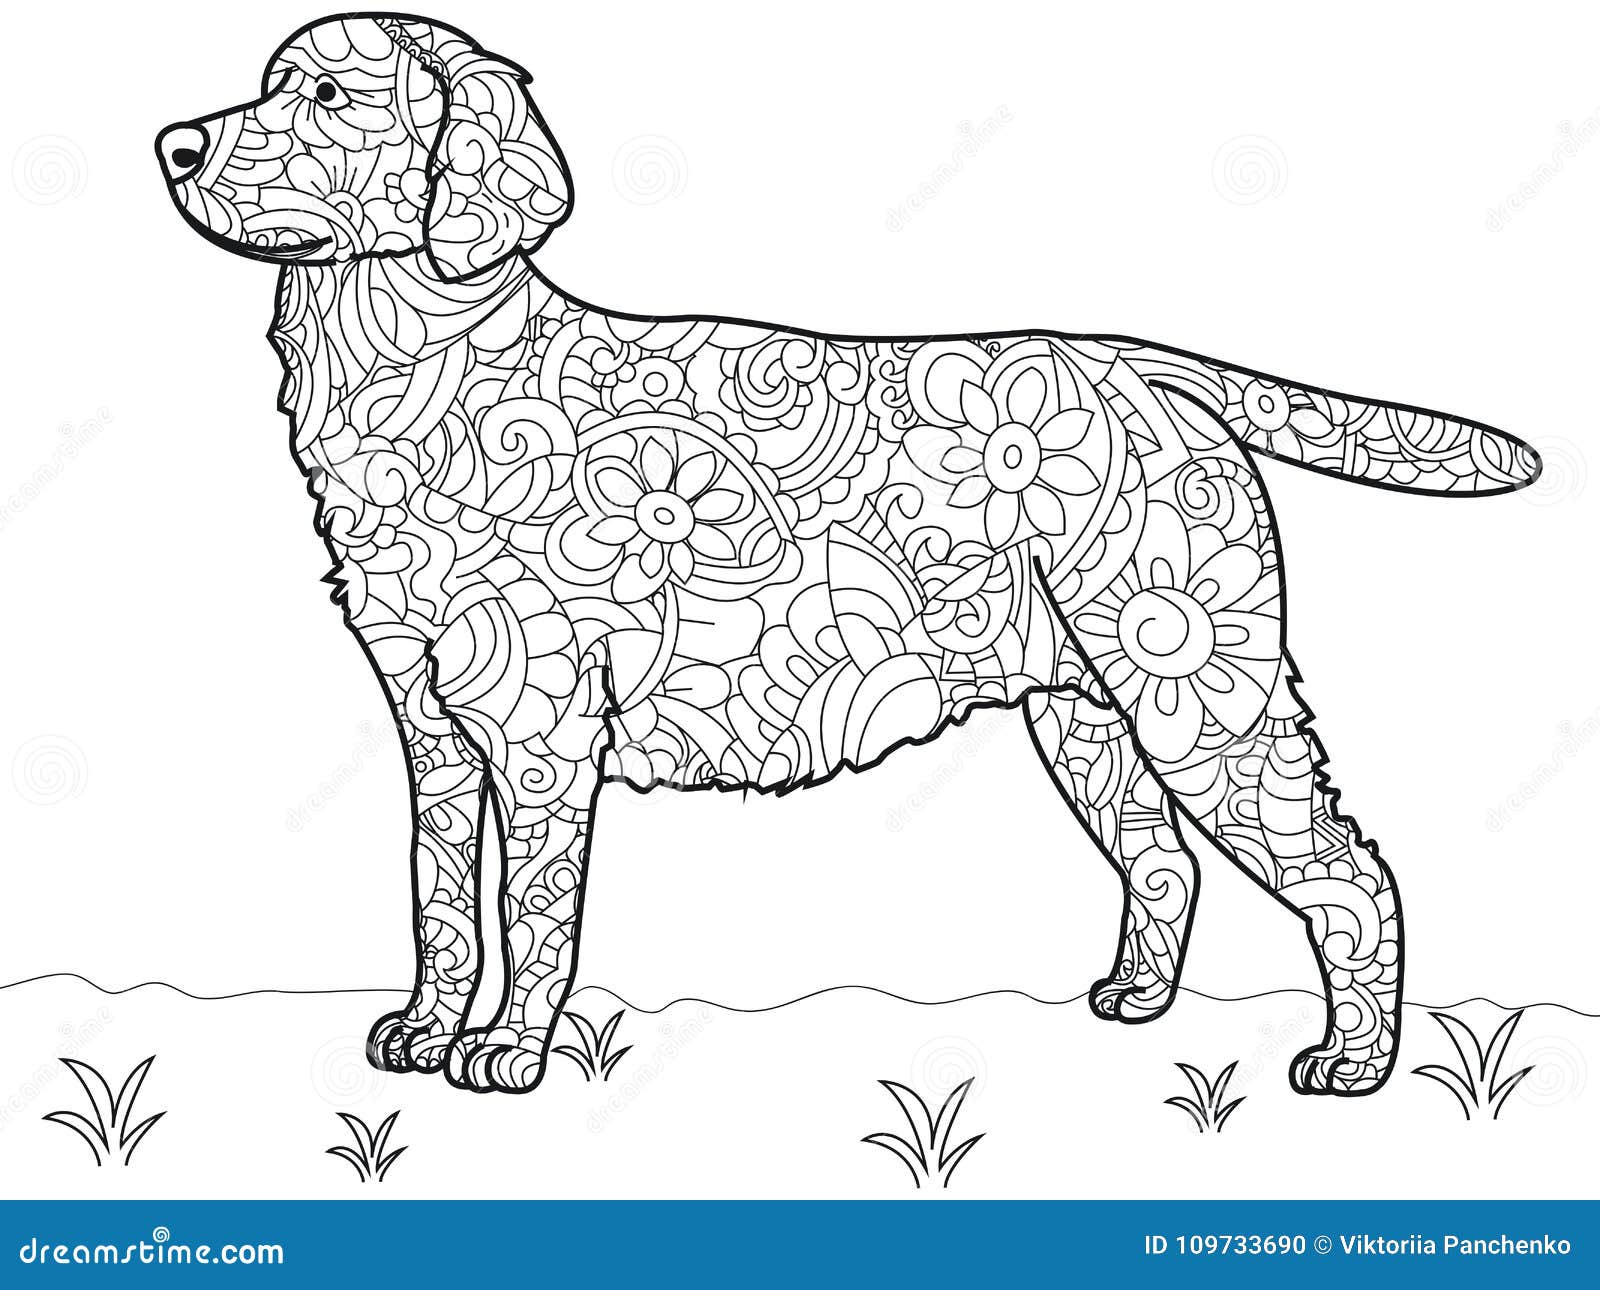 Colouring labrador stock illustrations â colouring labrador stock illustrations vectors clipart